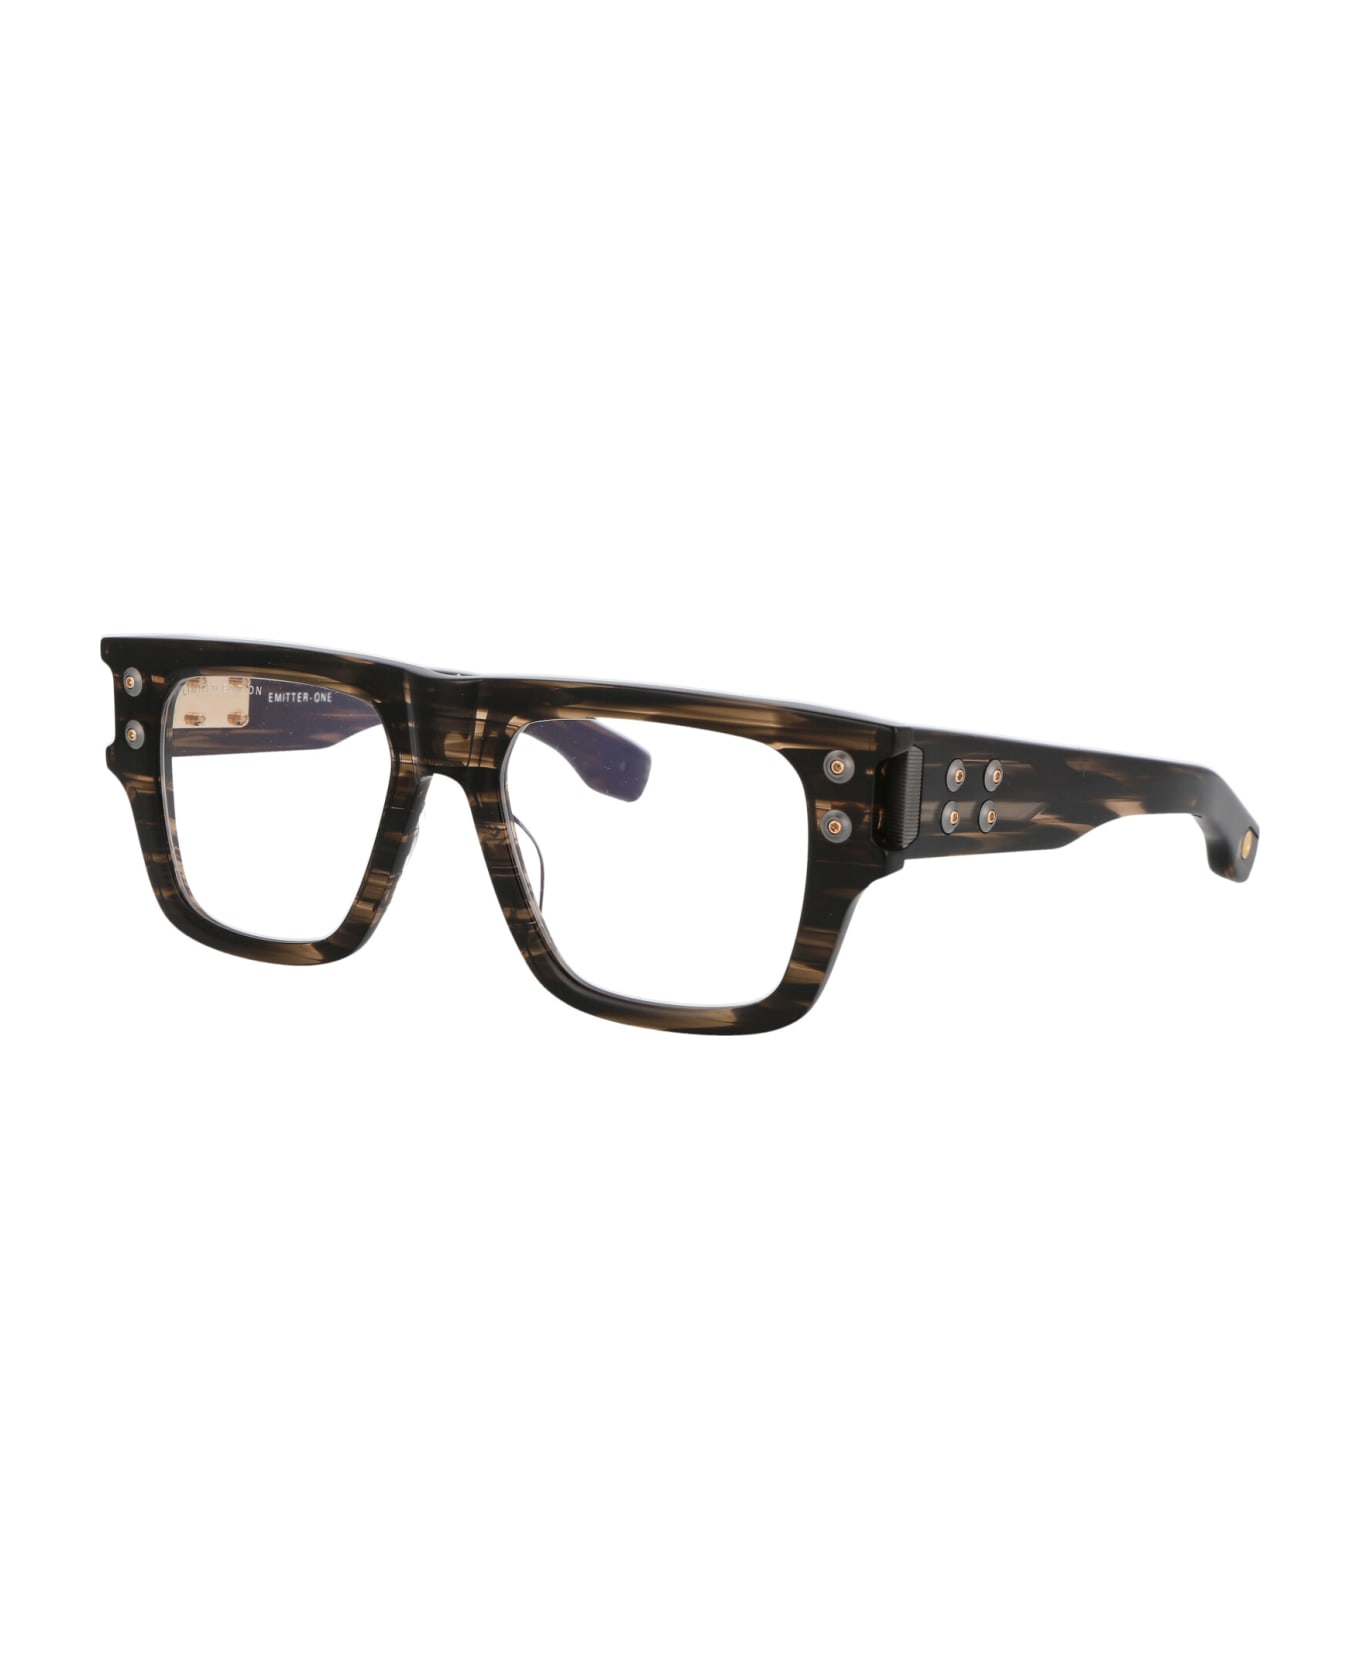 Dita Emitter-one Glasses - Burnt Timber - Black Iron